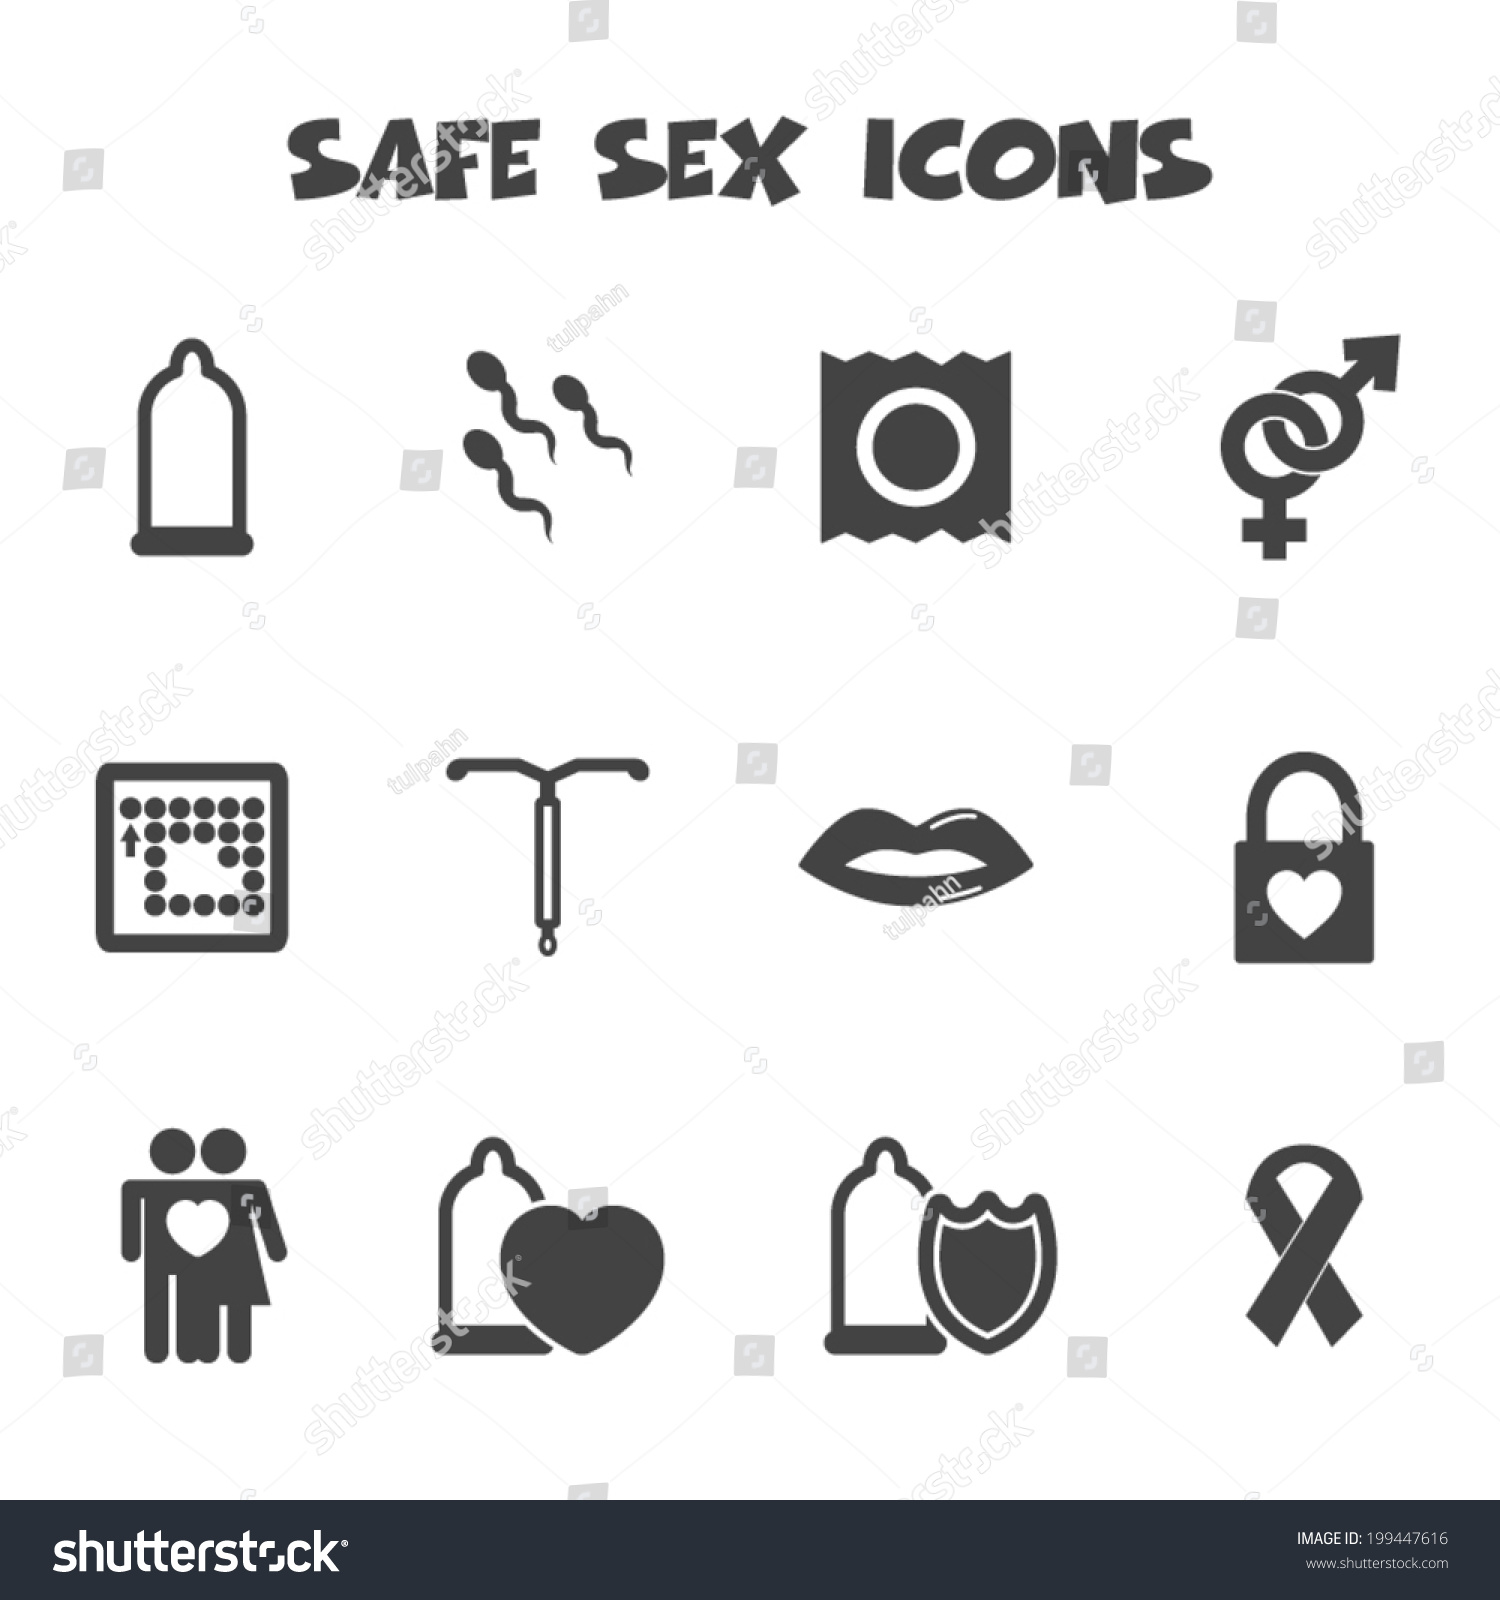 Safe Sex Icons Mono Vector Symbols Stock Vector 199447616 Shutterstock